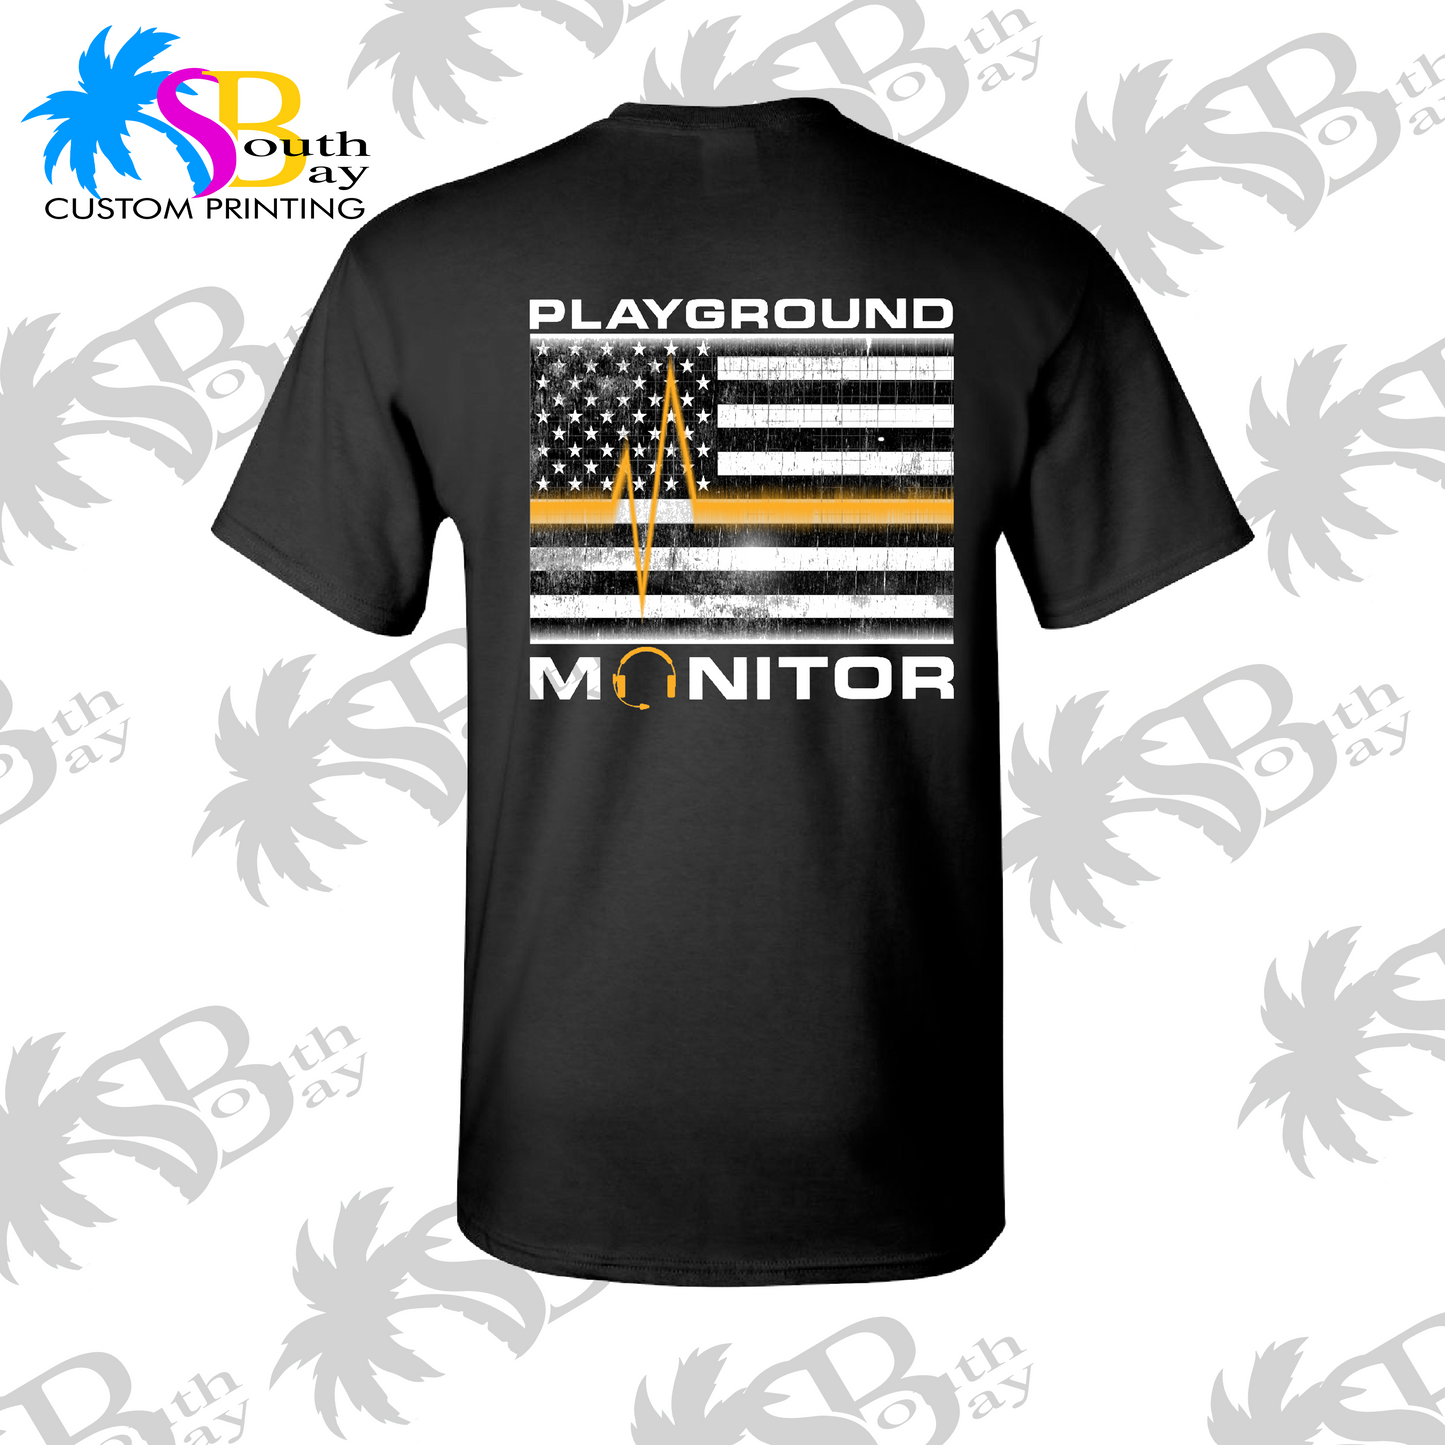 Playground Monitor T-Shirt - Dispatch Shirt, 911 Communications, Gold Line, Funny Dispatch, Dispatcher Gift